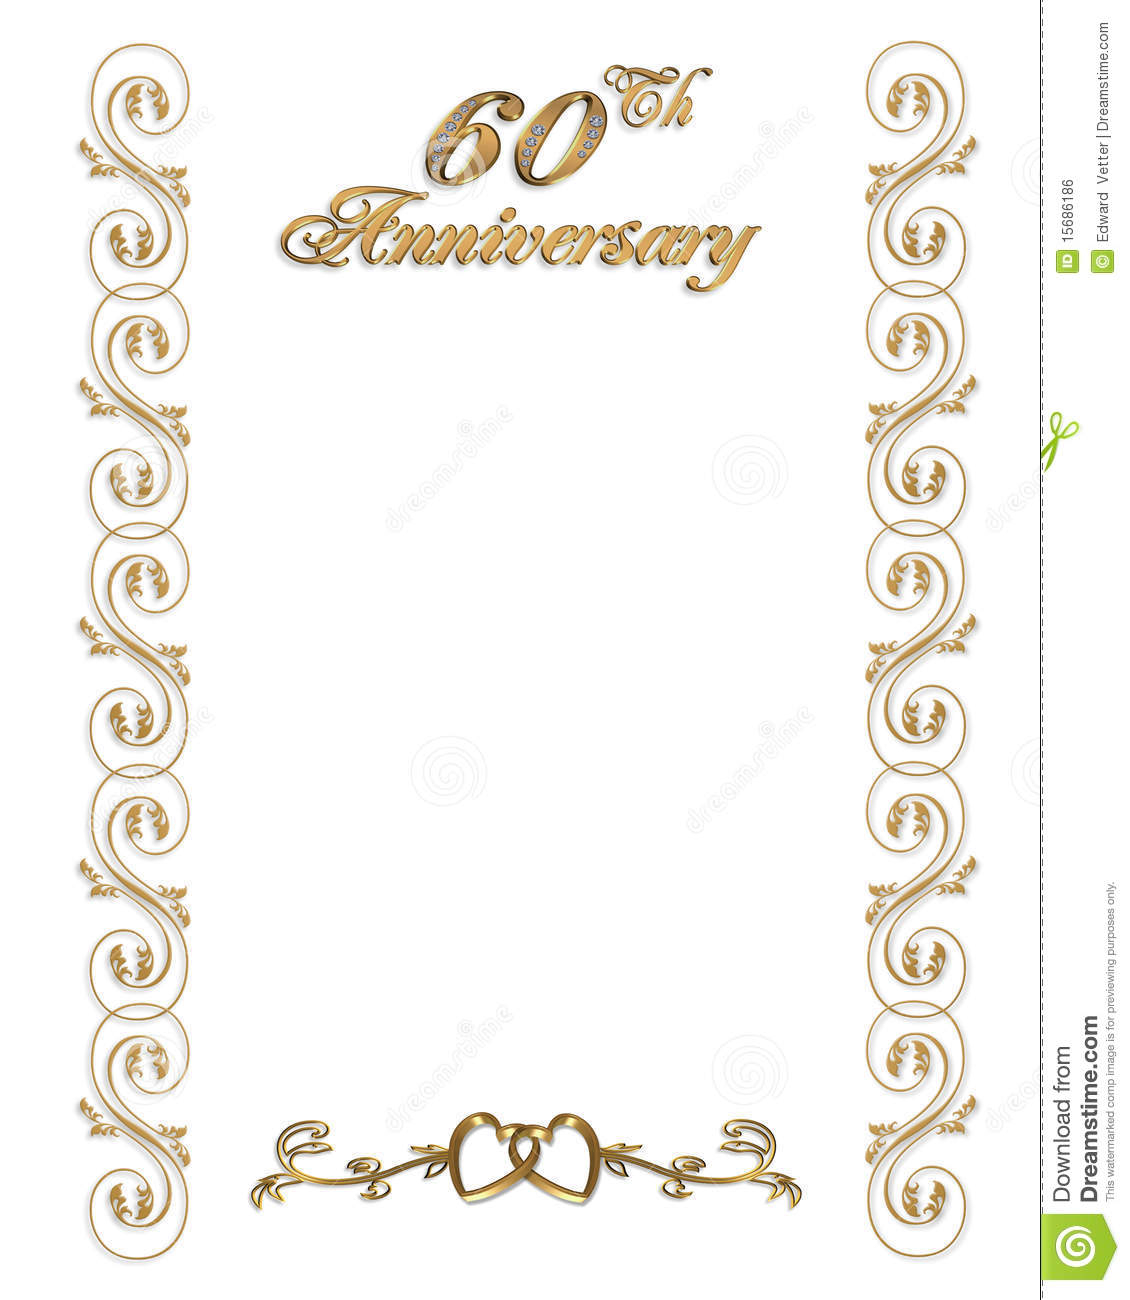 60th-anniversary-invitations-templates-business-template-ideas